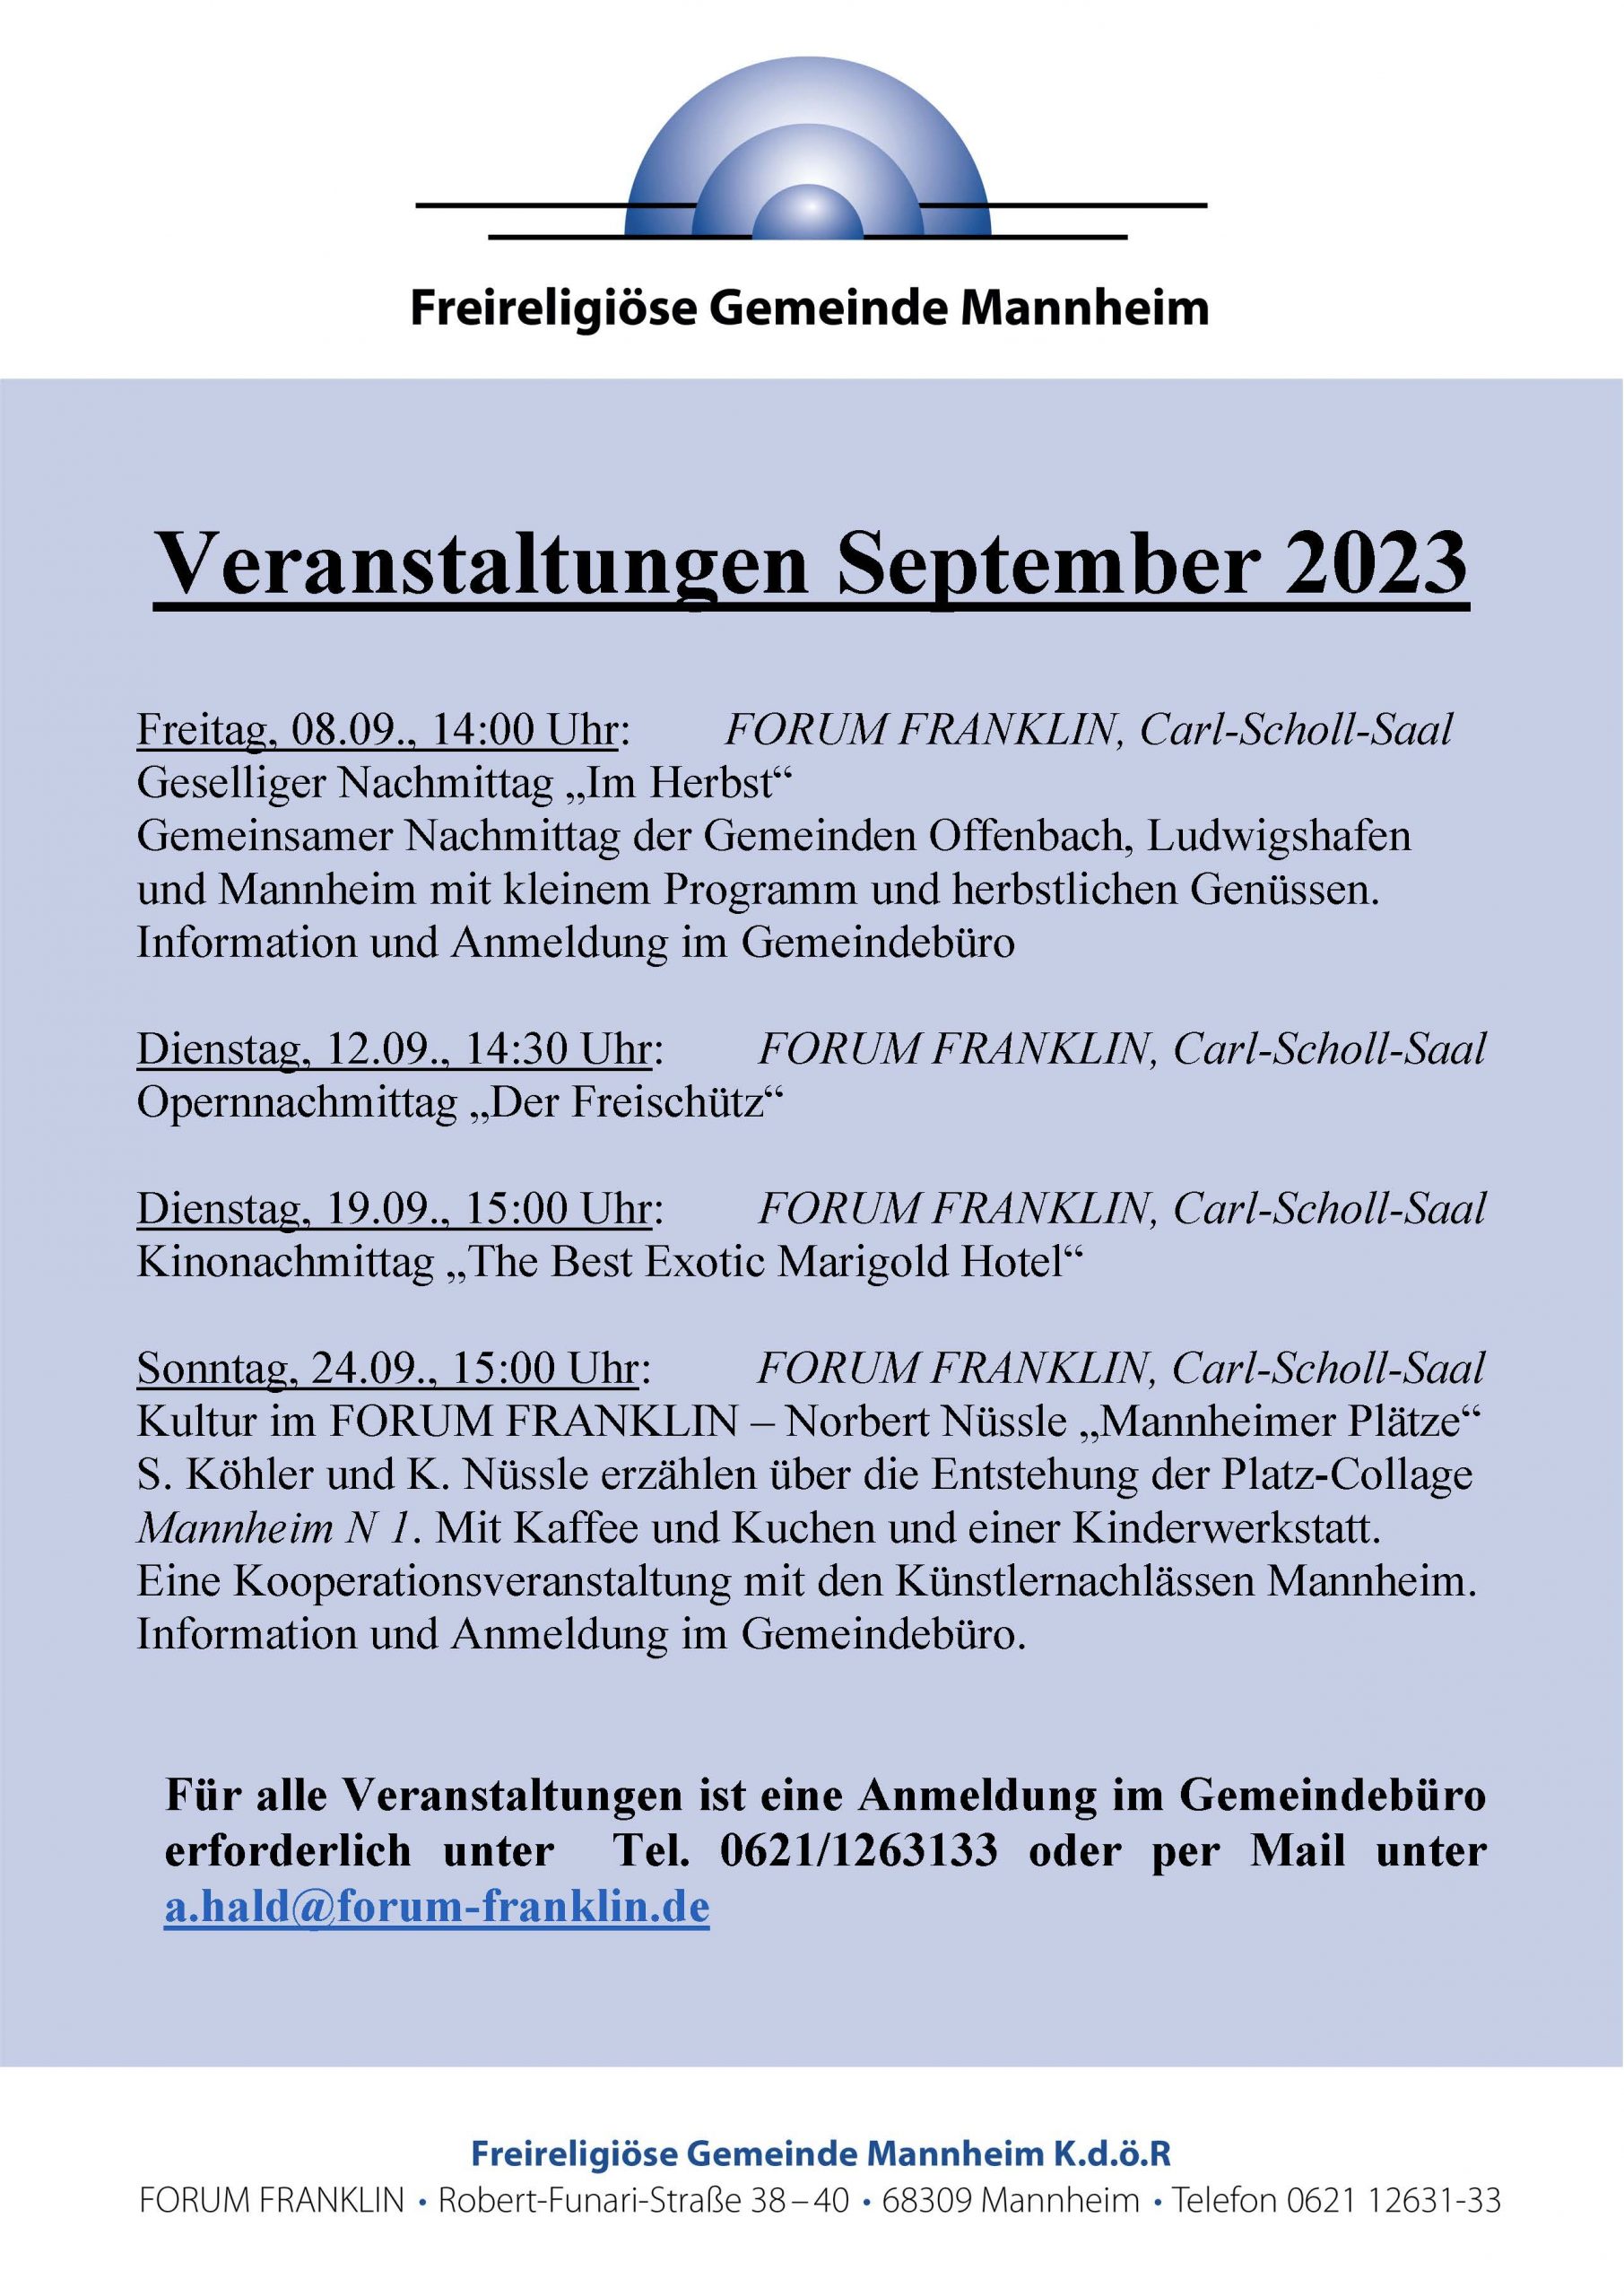 Veranstaltungen FORUM FRANKLIN September 2023